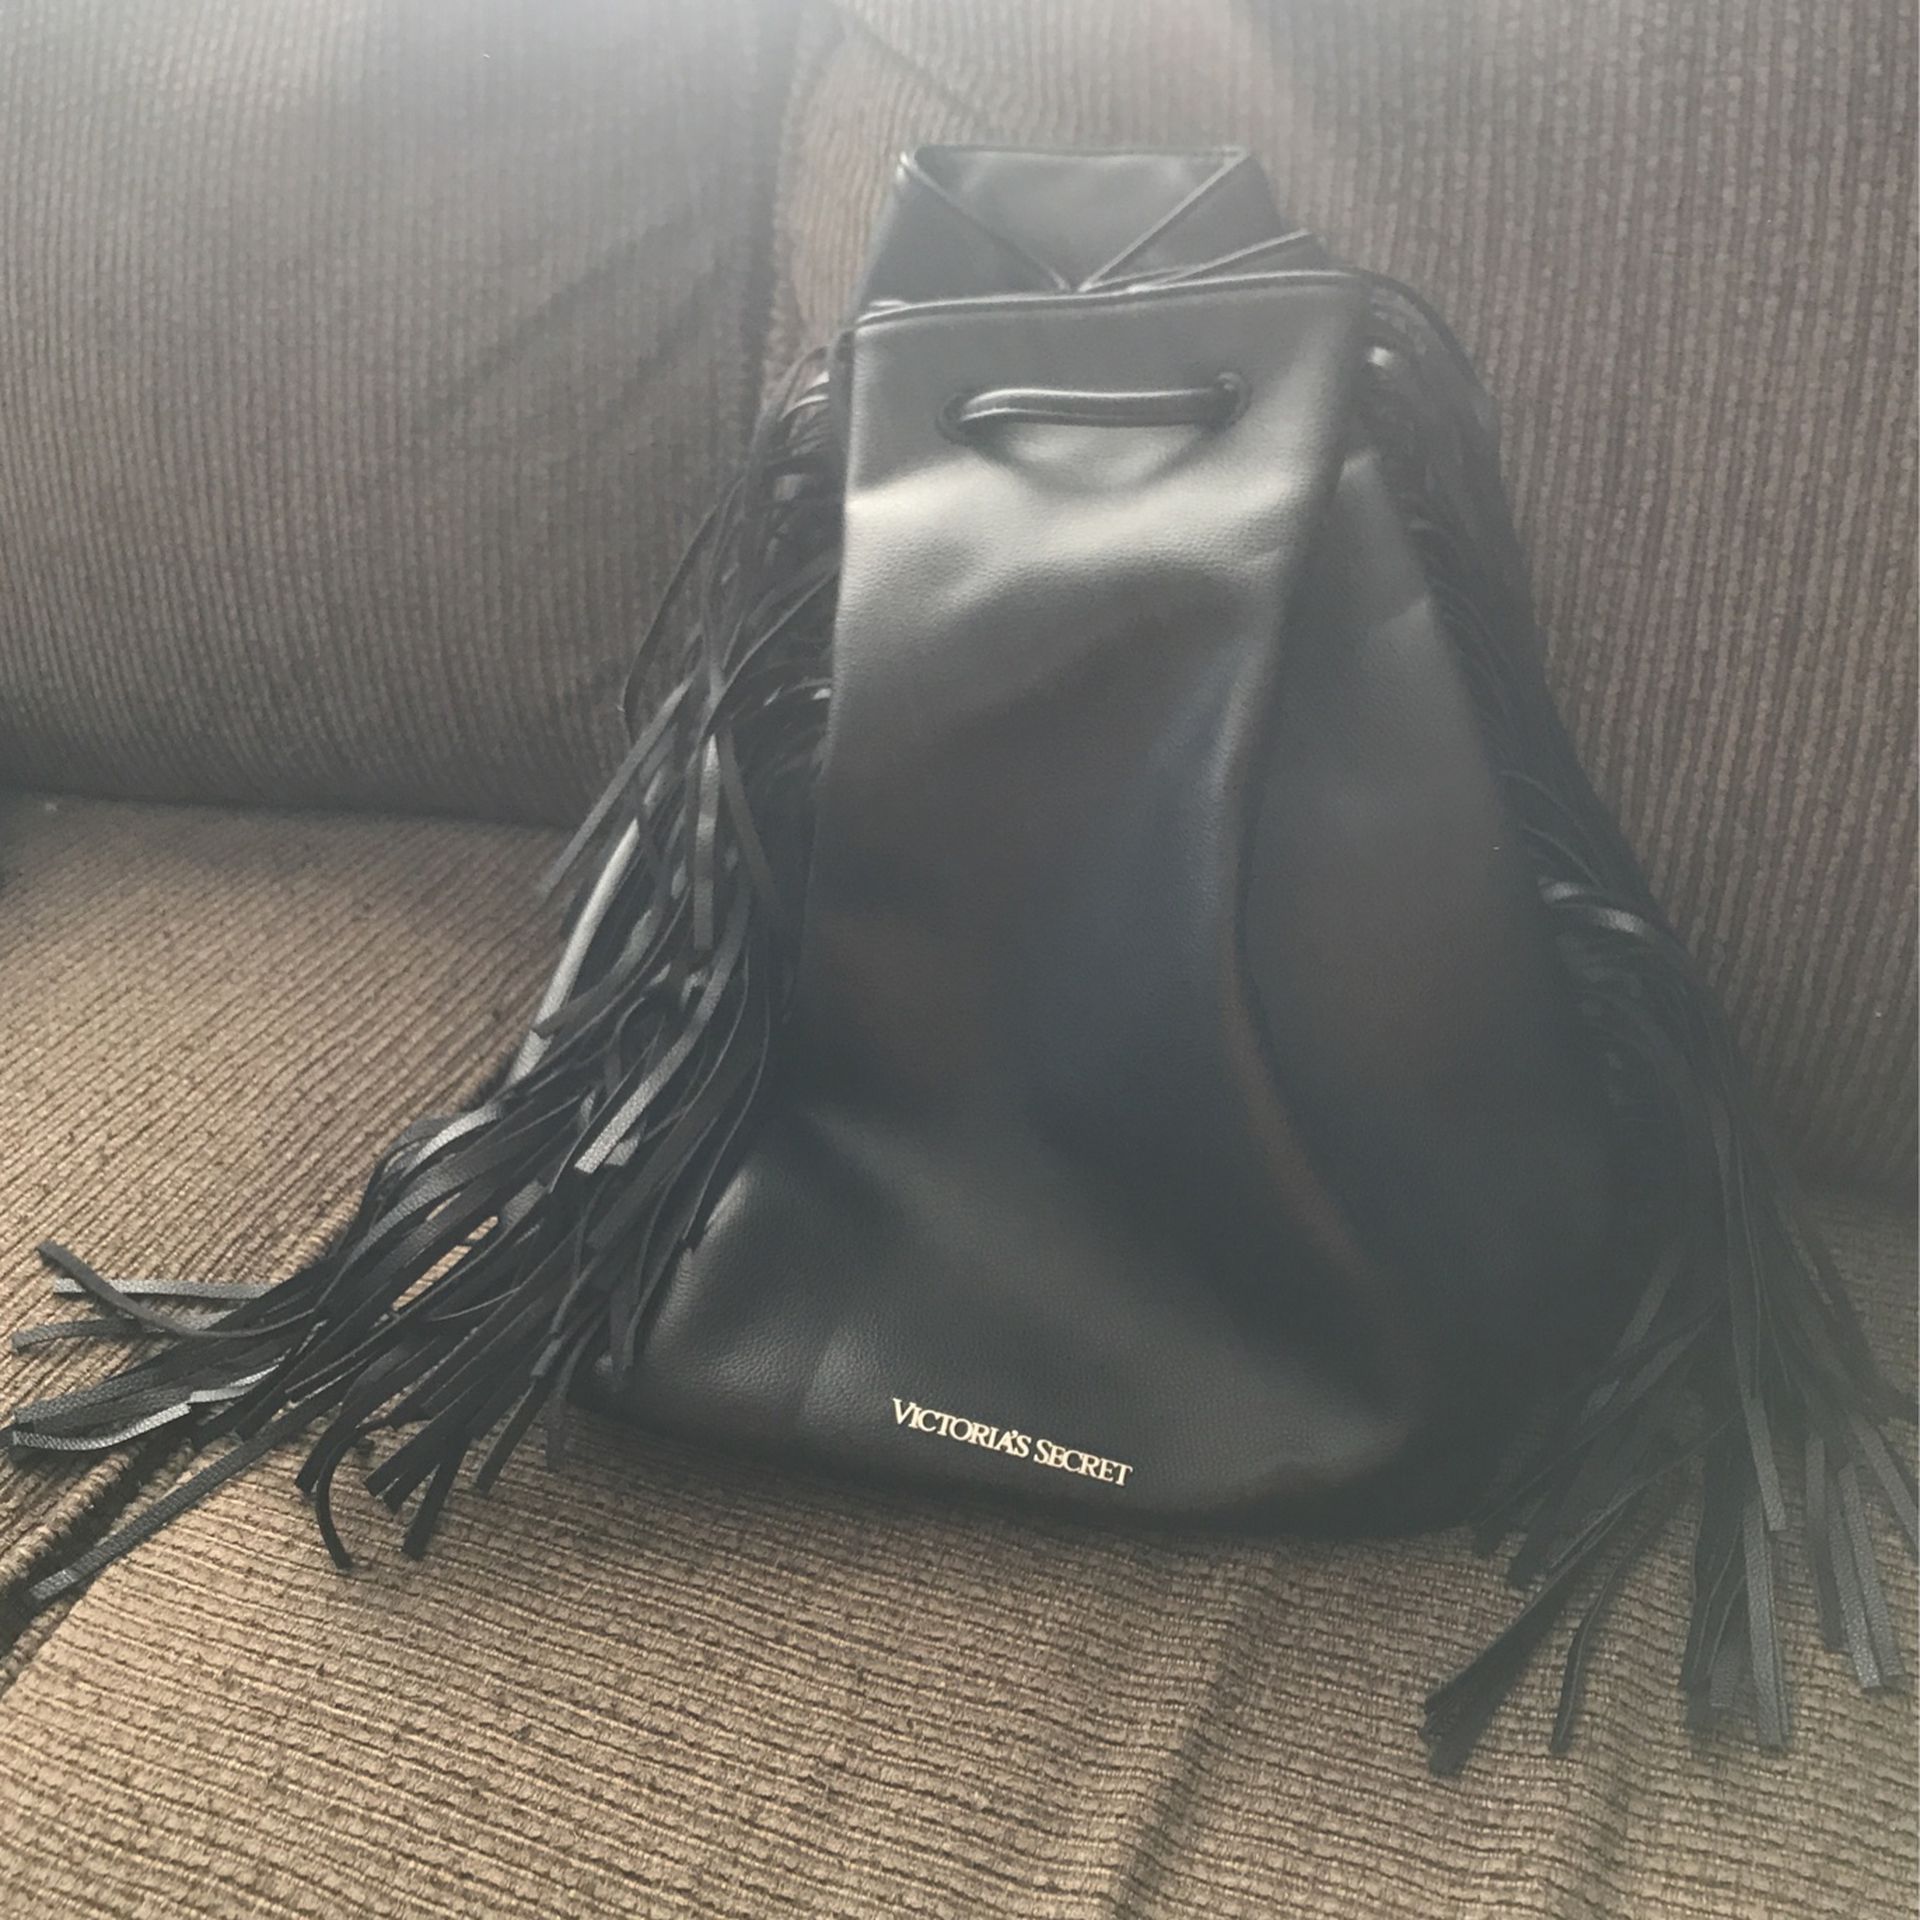 Victoria Secret Fringe Purse Backpack for Sale in Stockton, CA - OfferUp